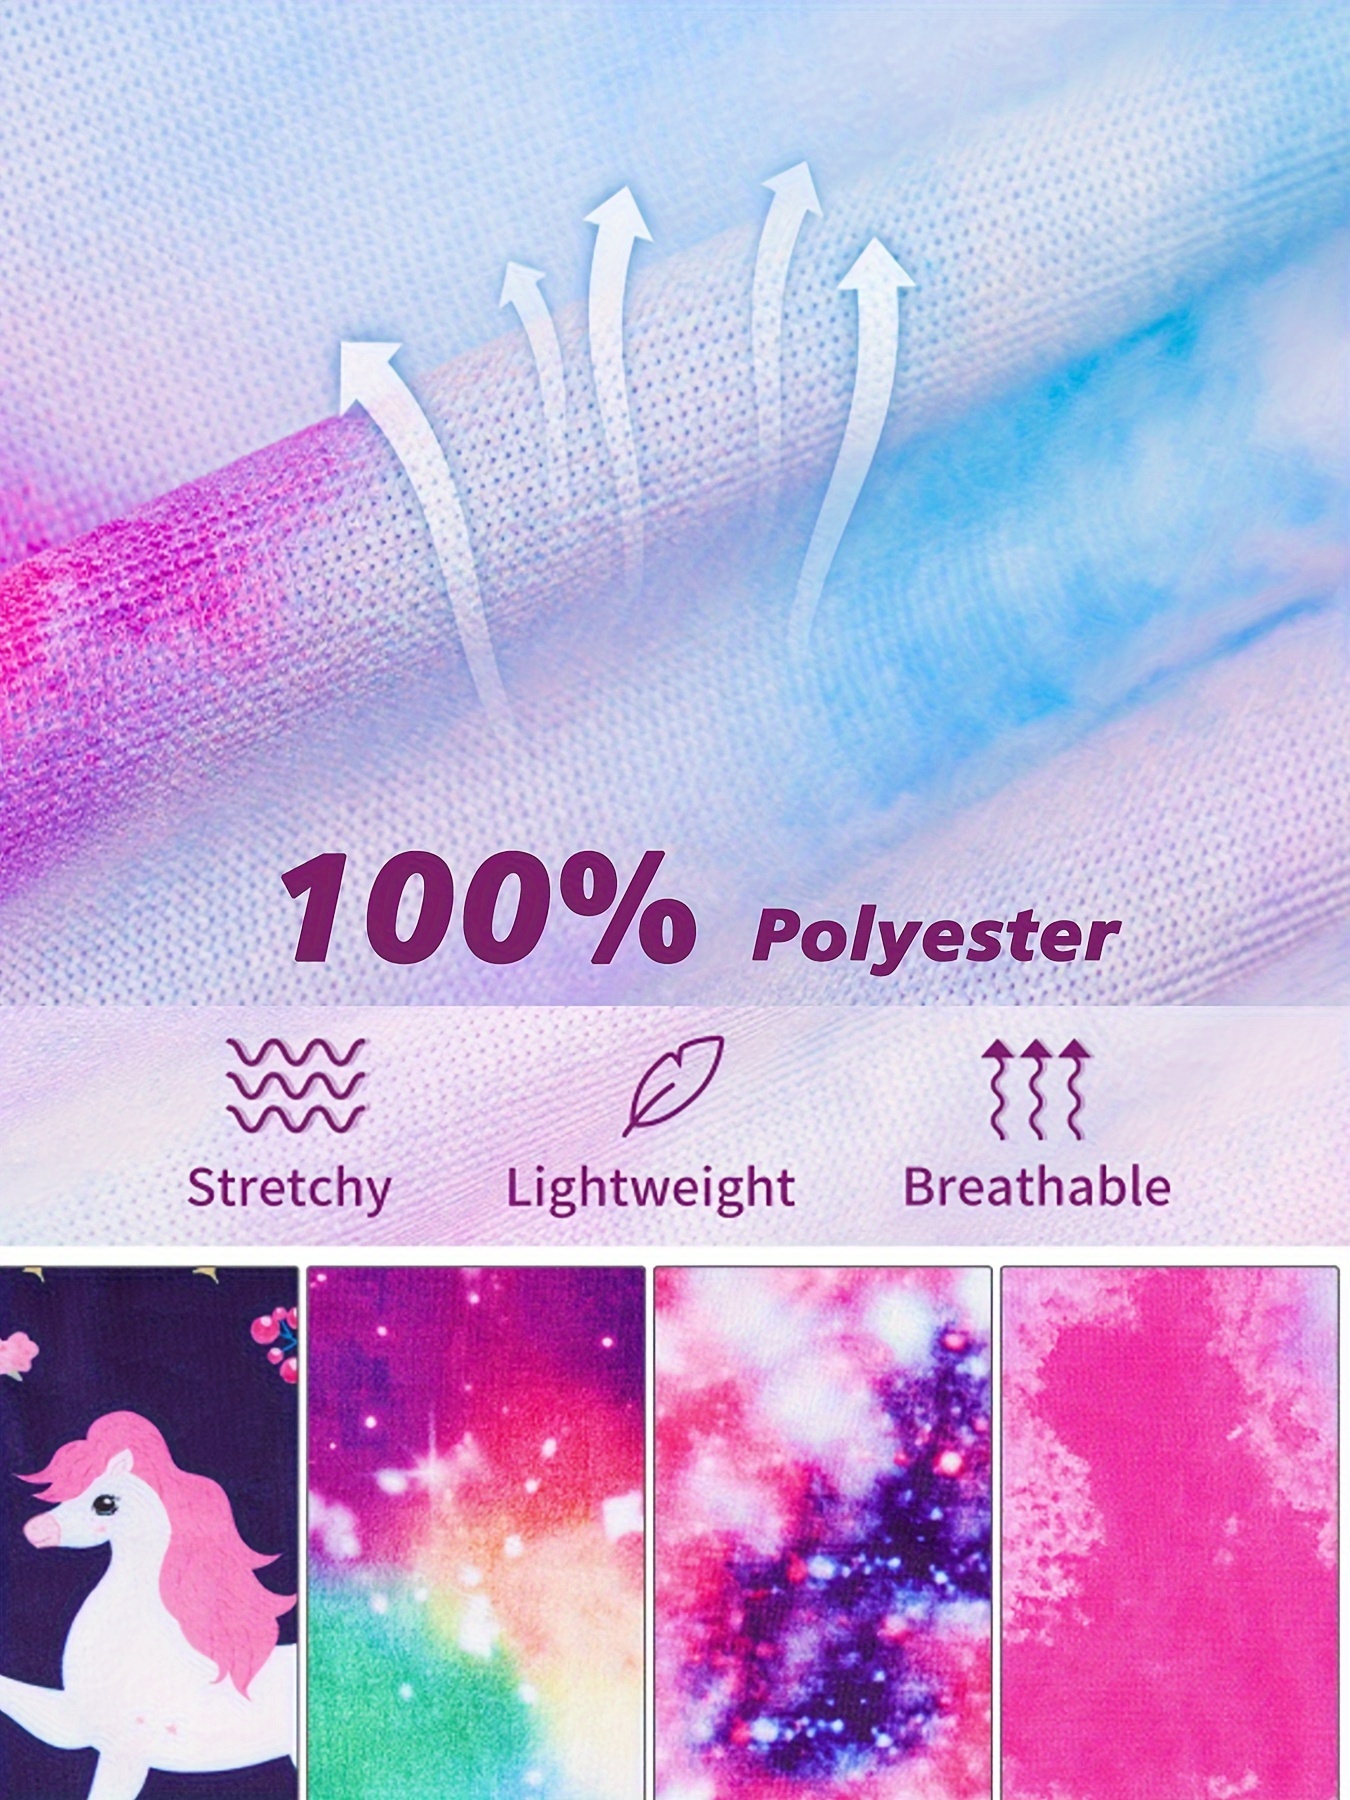 100+] Glitter Galaxy Wallpapers